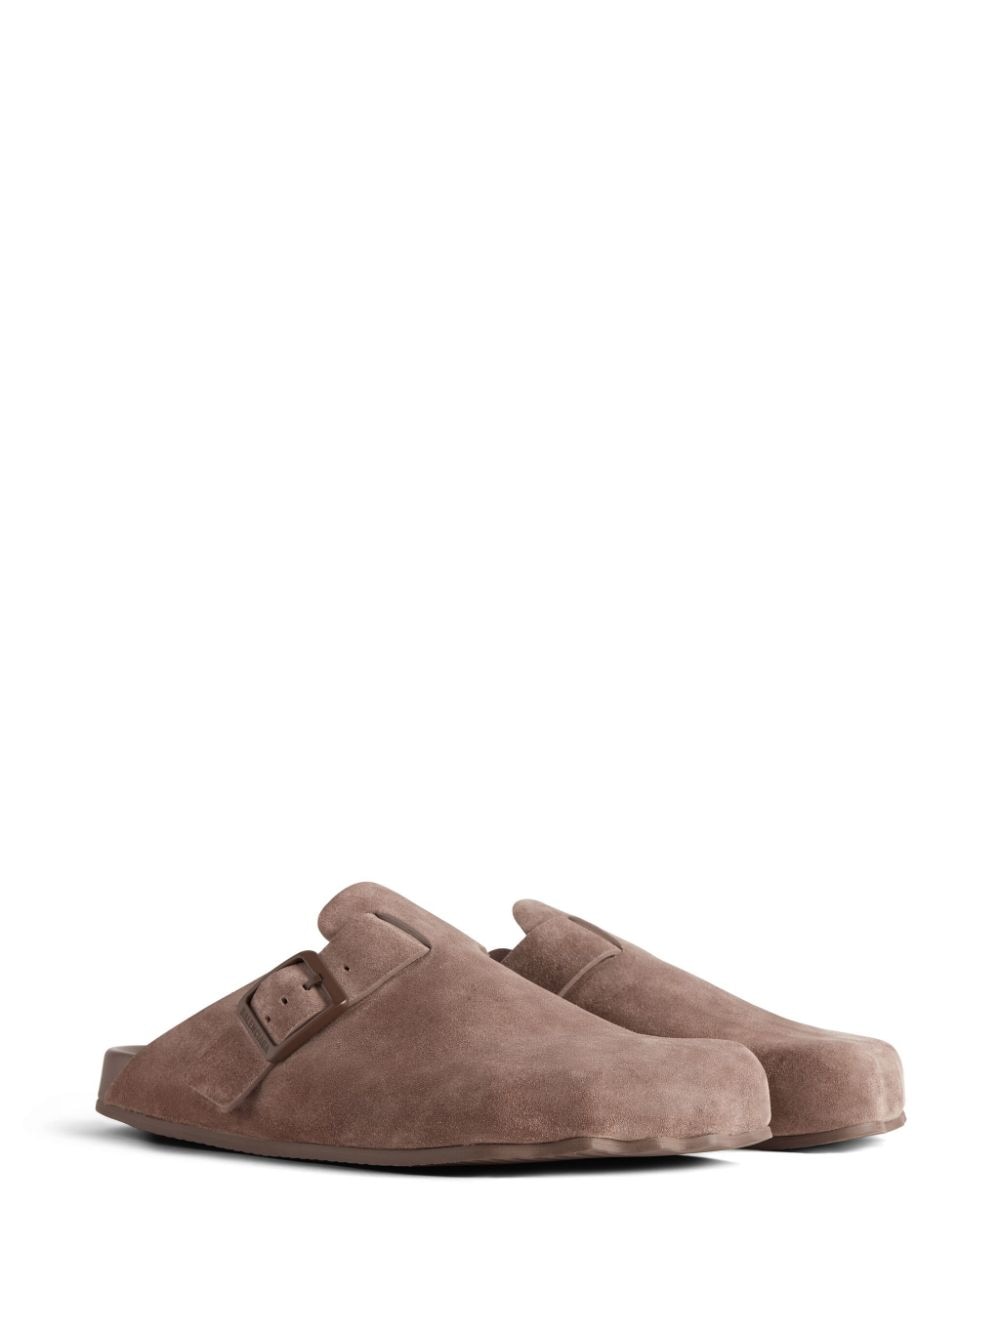 BALENCIAGA Brown Straw Flat Sandals for Women